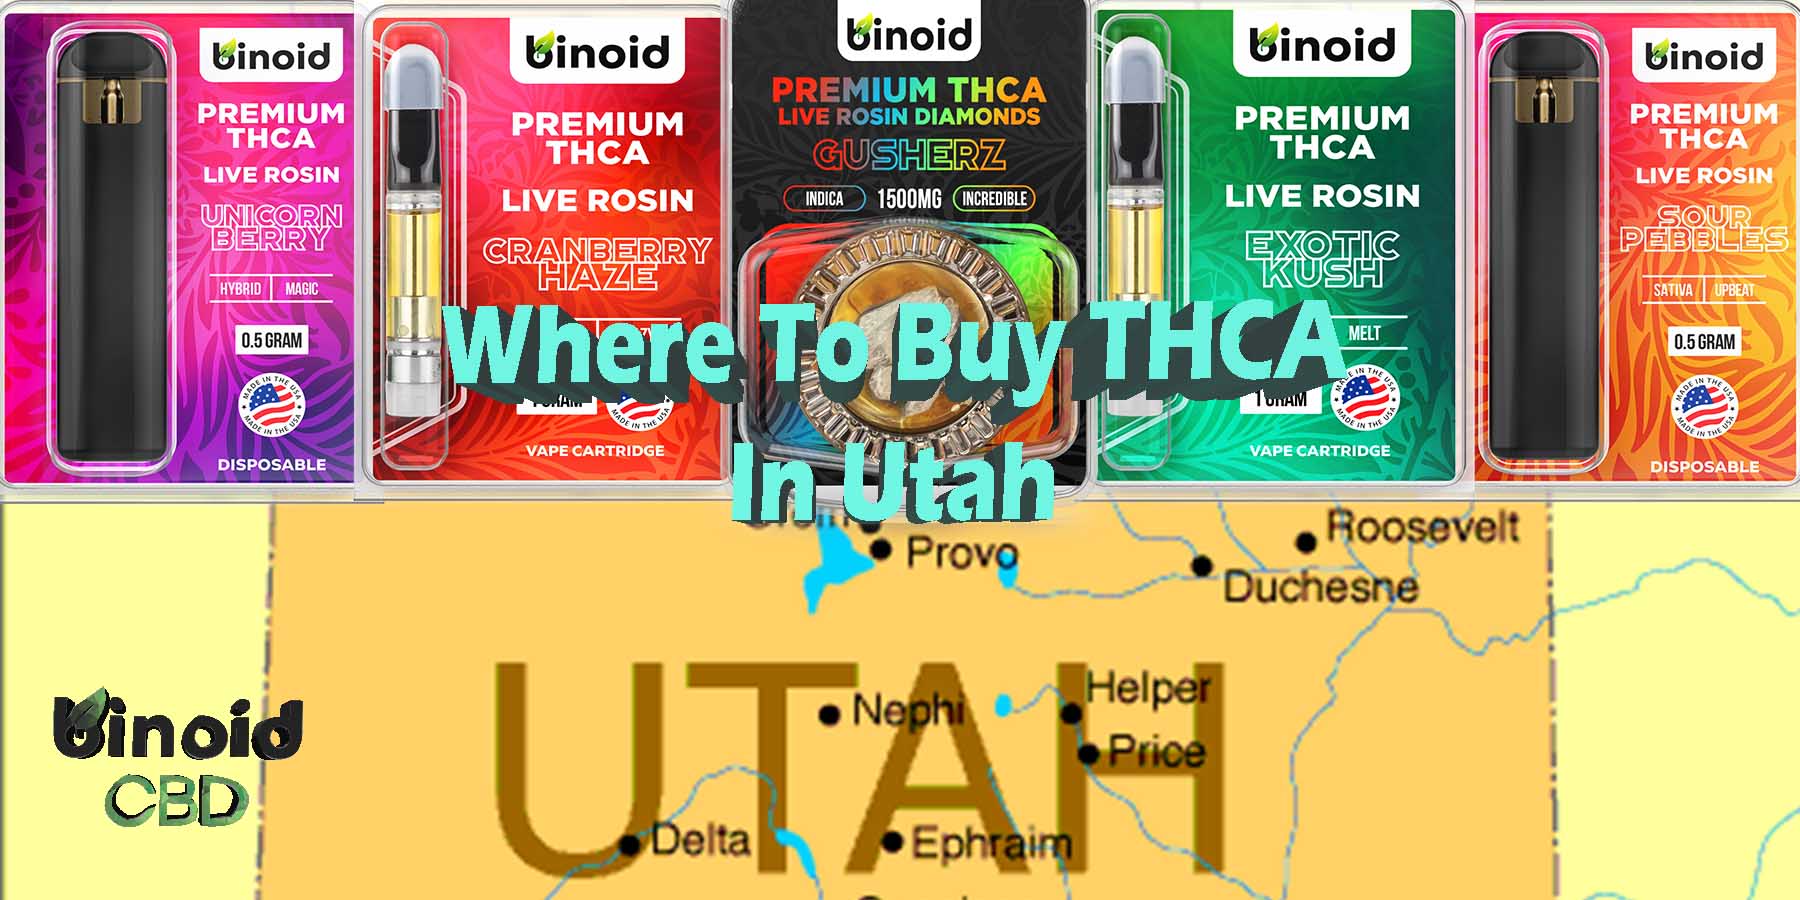 Where To Buy THCA In Utah Online Best Brand Price Get Near Me Lowest Coupon Discount Store Shop Vapes Carts Online Best Brand Strongest Get Near Me How To Get Binoid Reddit